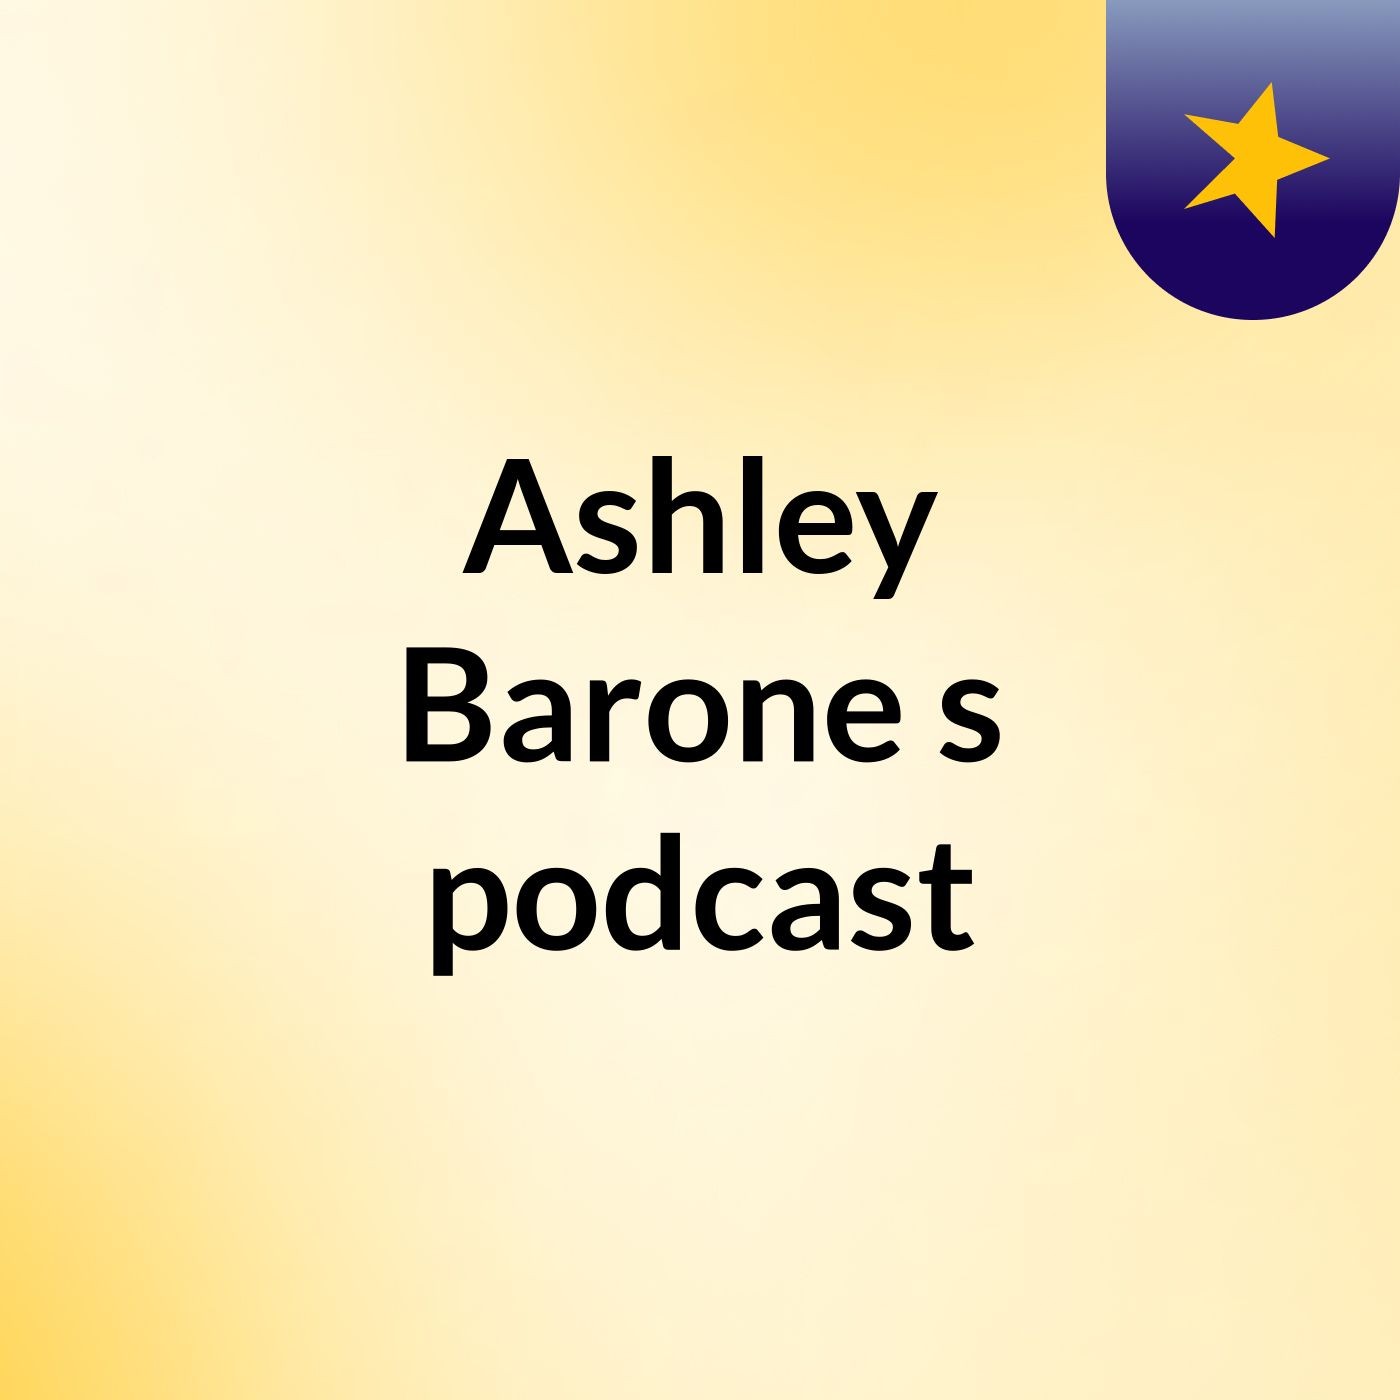 Episode 6 - Ashley Barone's podcast